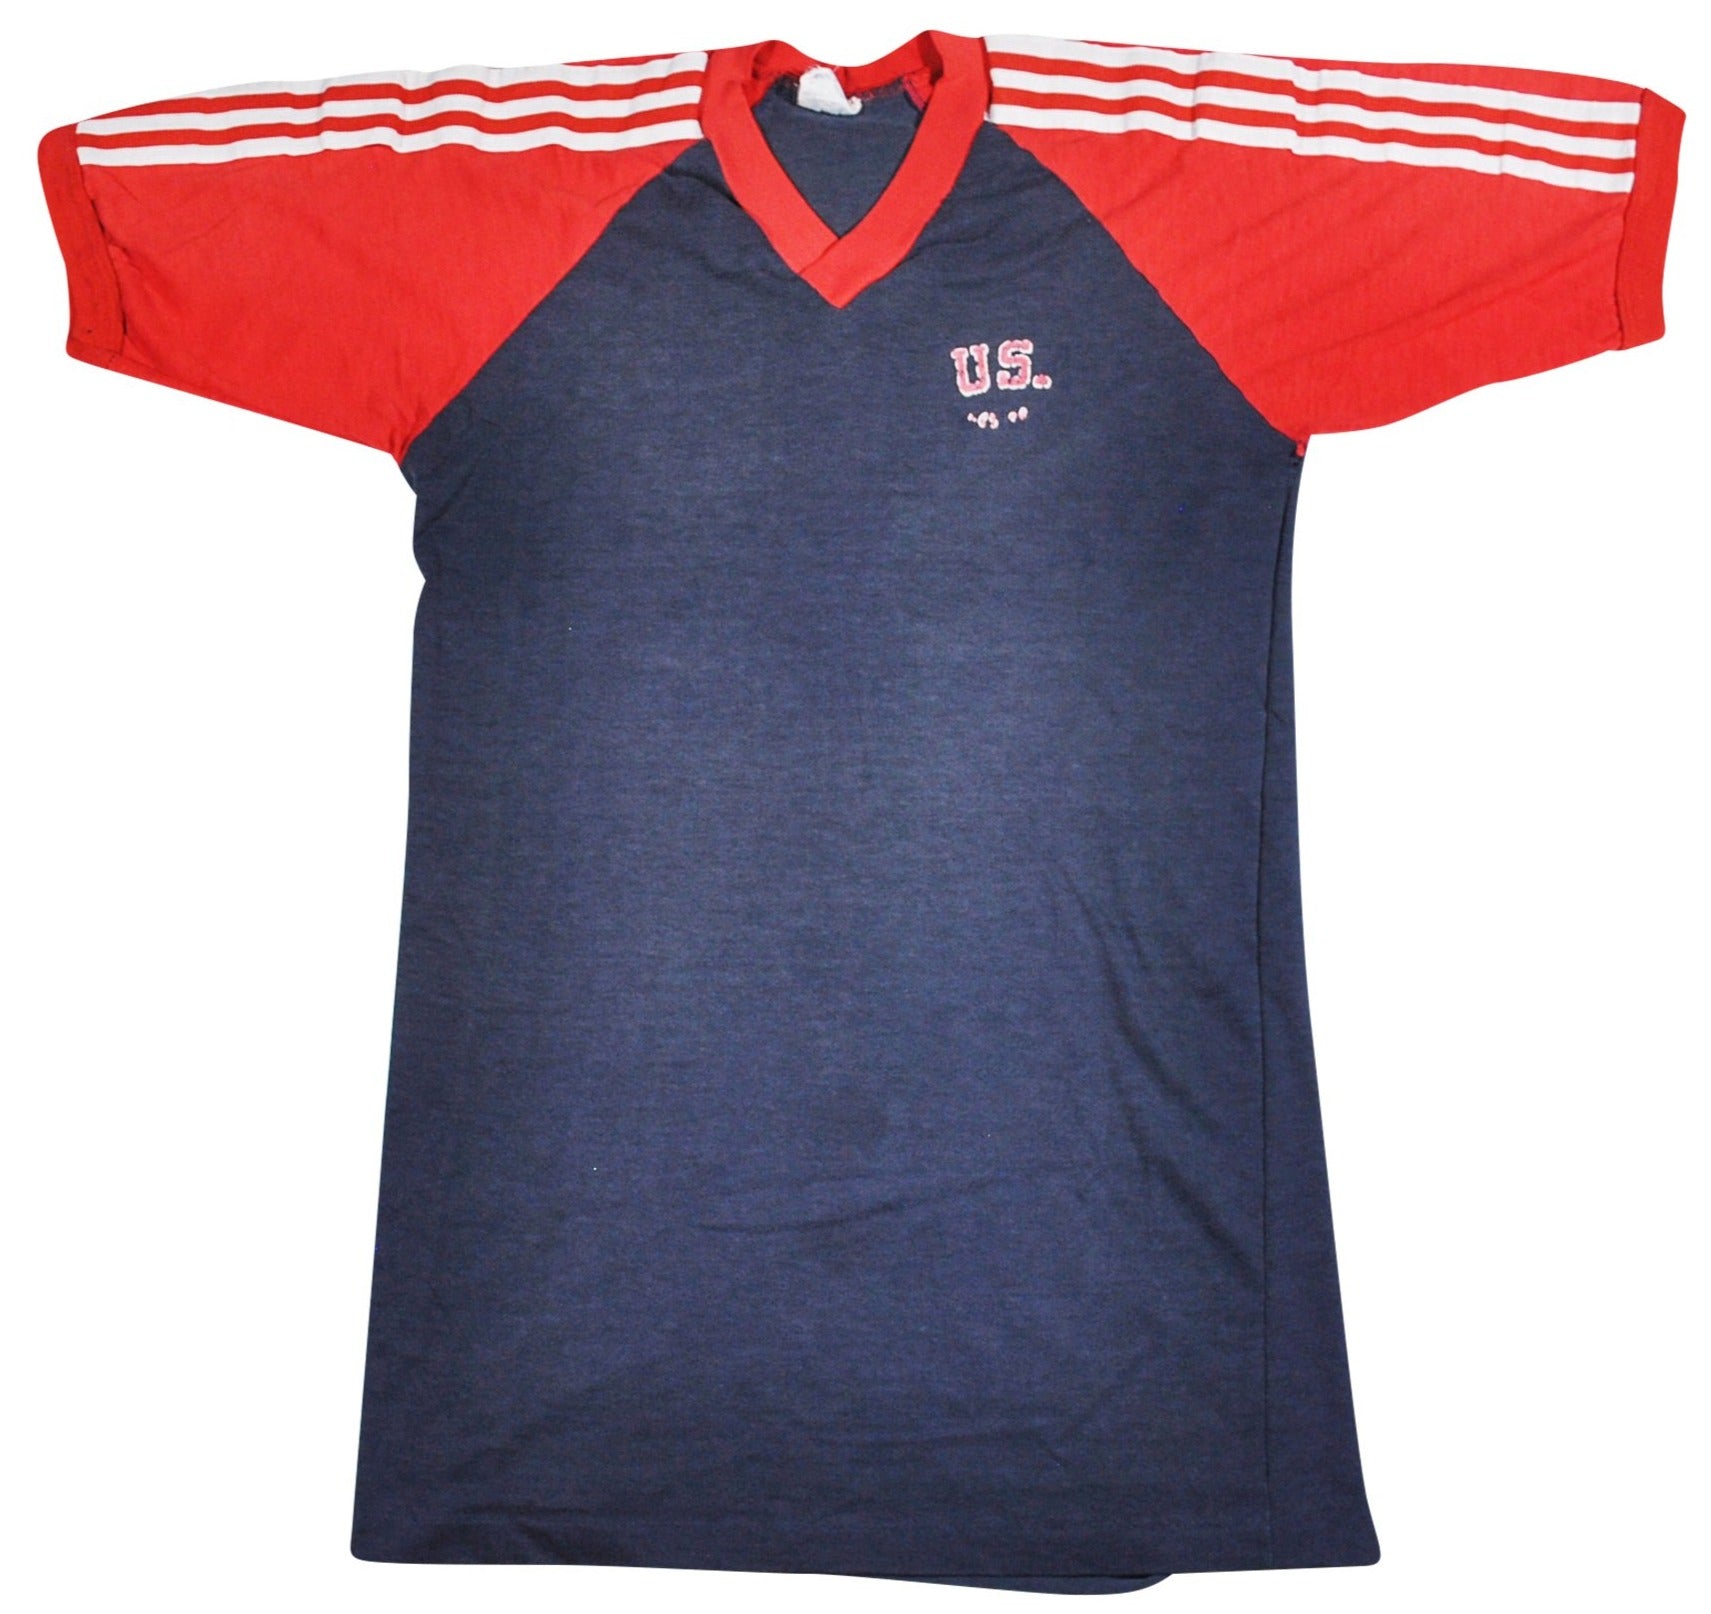 Vintage Adidas USA 80s Shirt Size Medium(tall) – Yesterday's